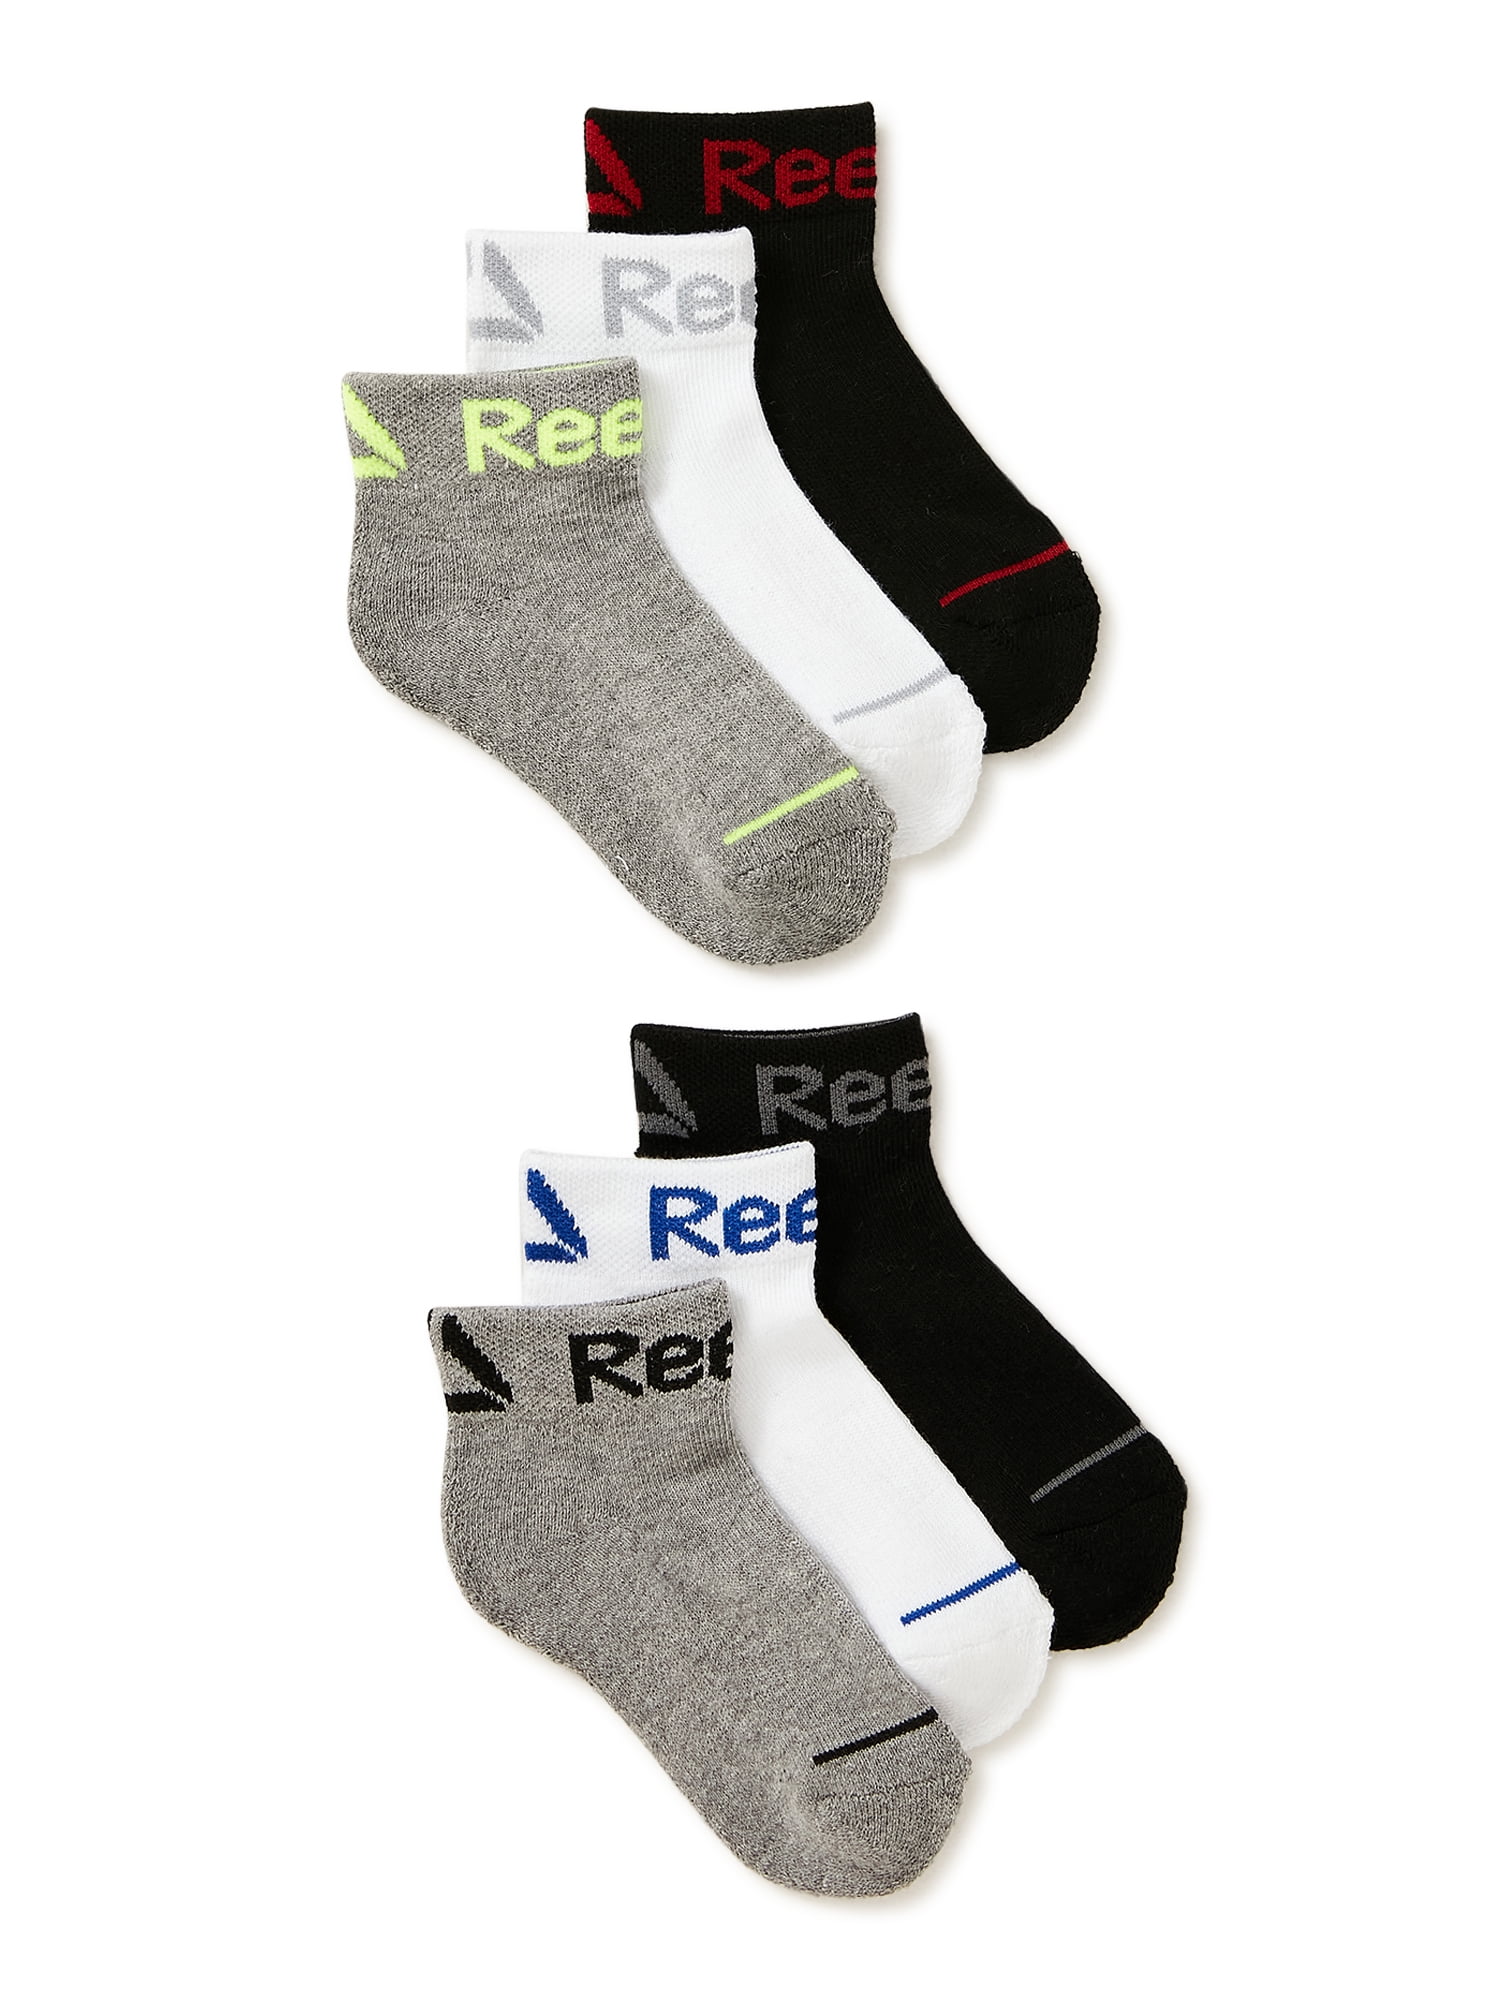 Youth Boy's 6-Pair Reebok Quarter Cut Performance Socks Black & Grey Choose Size 